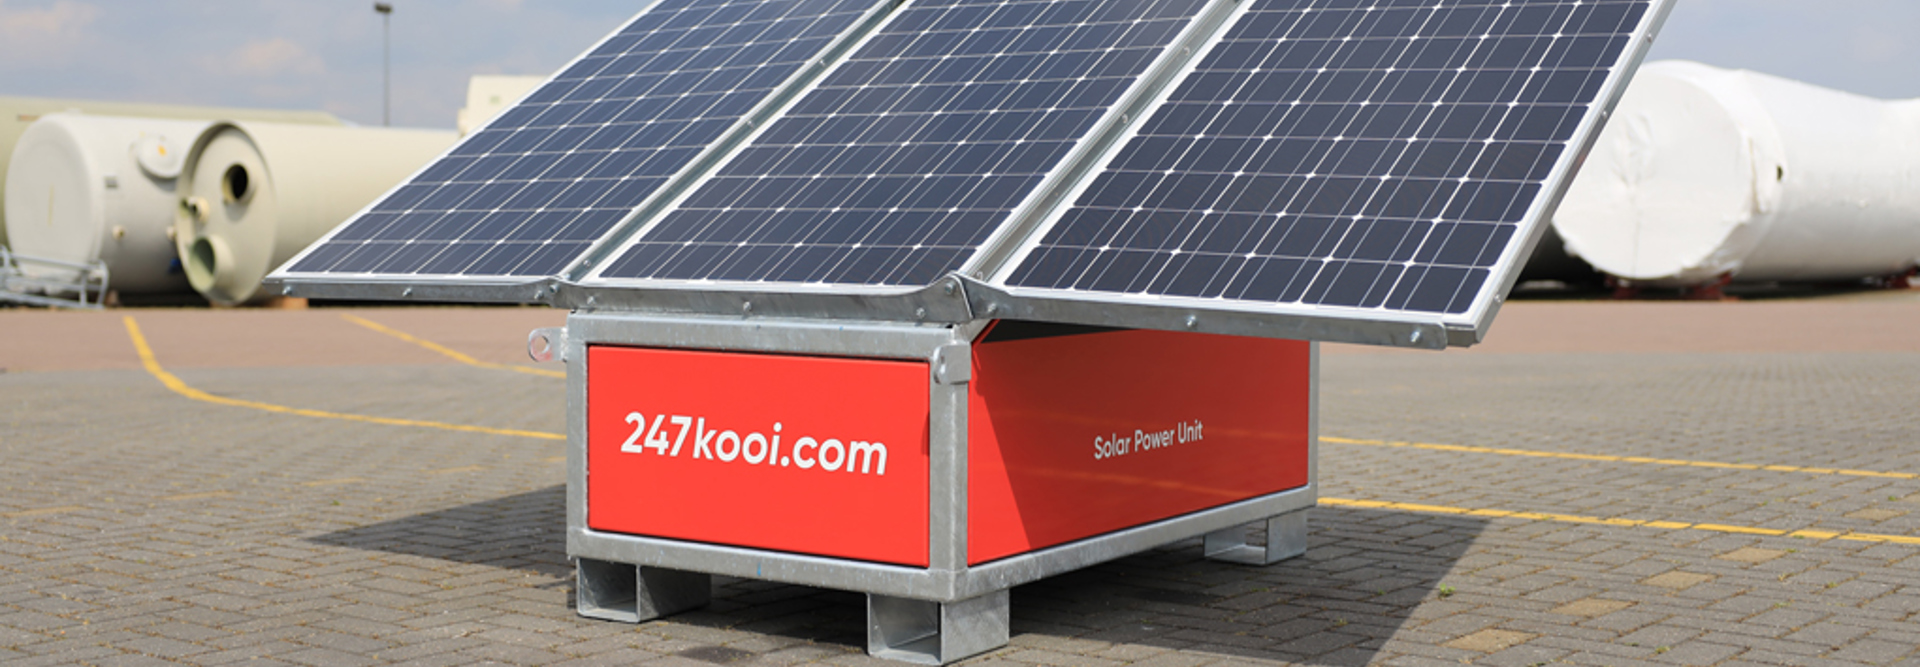 Solar Power Box With Camera Surveillance Kooi